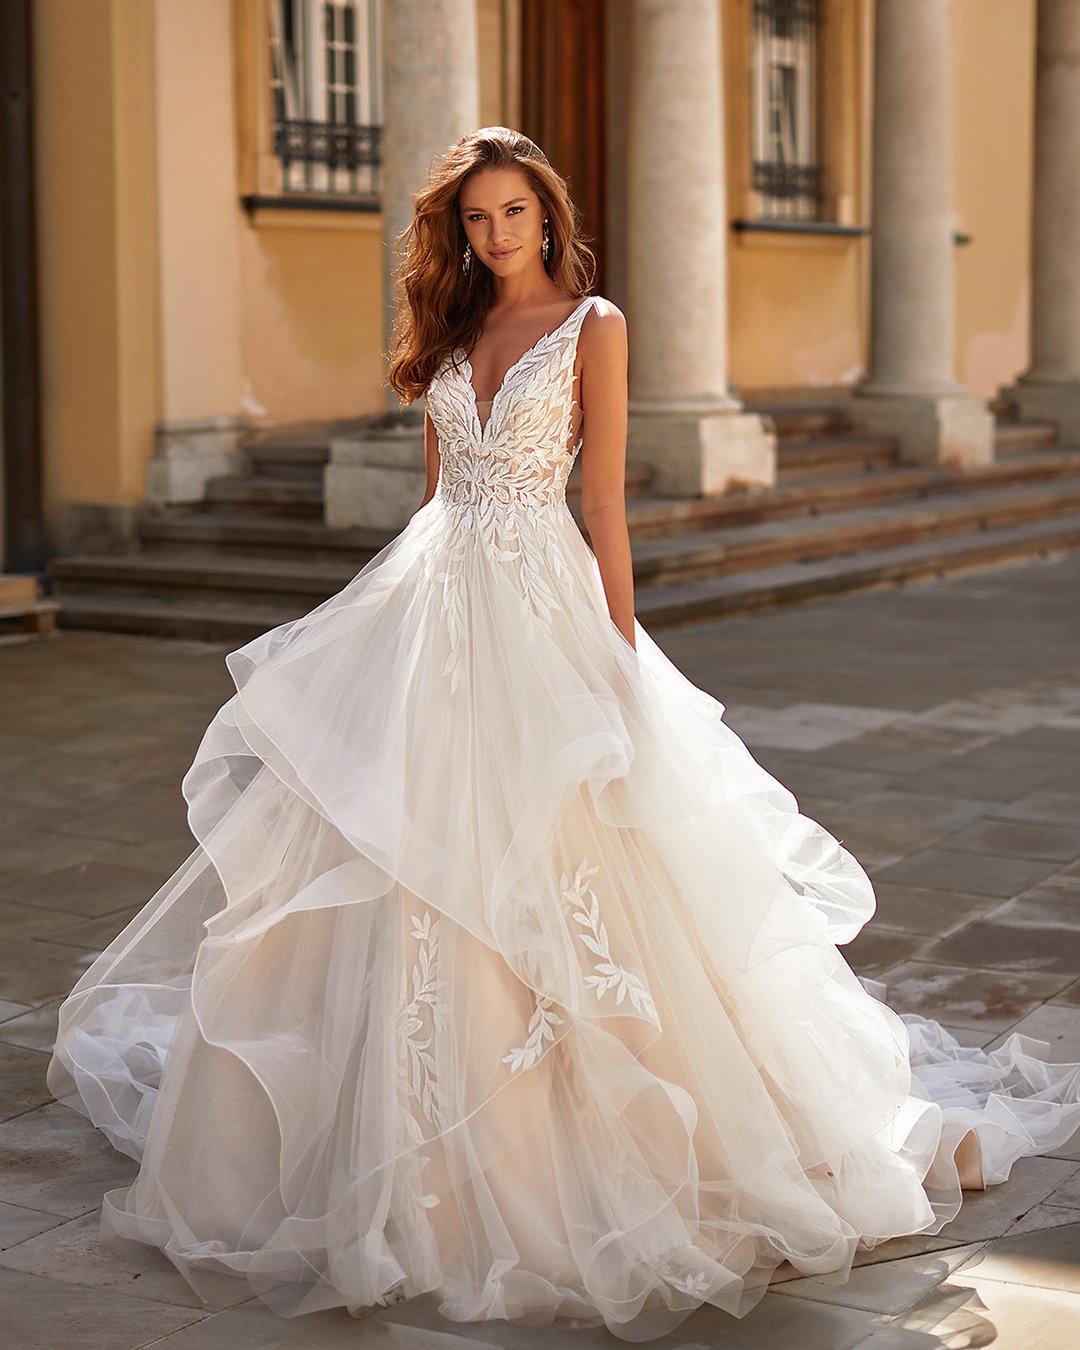 moonlight wedding dresses ball gown ruffled skirt 2021